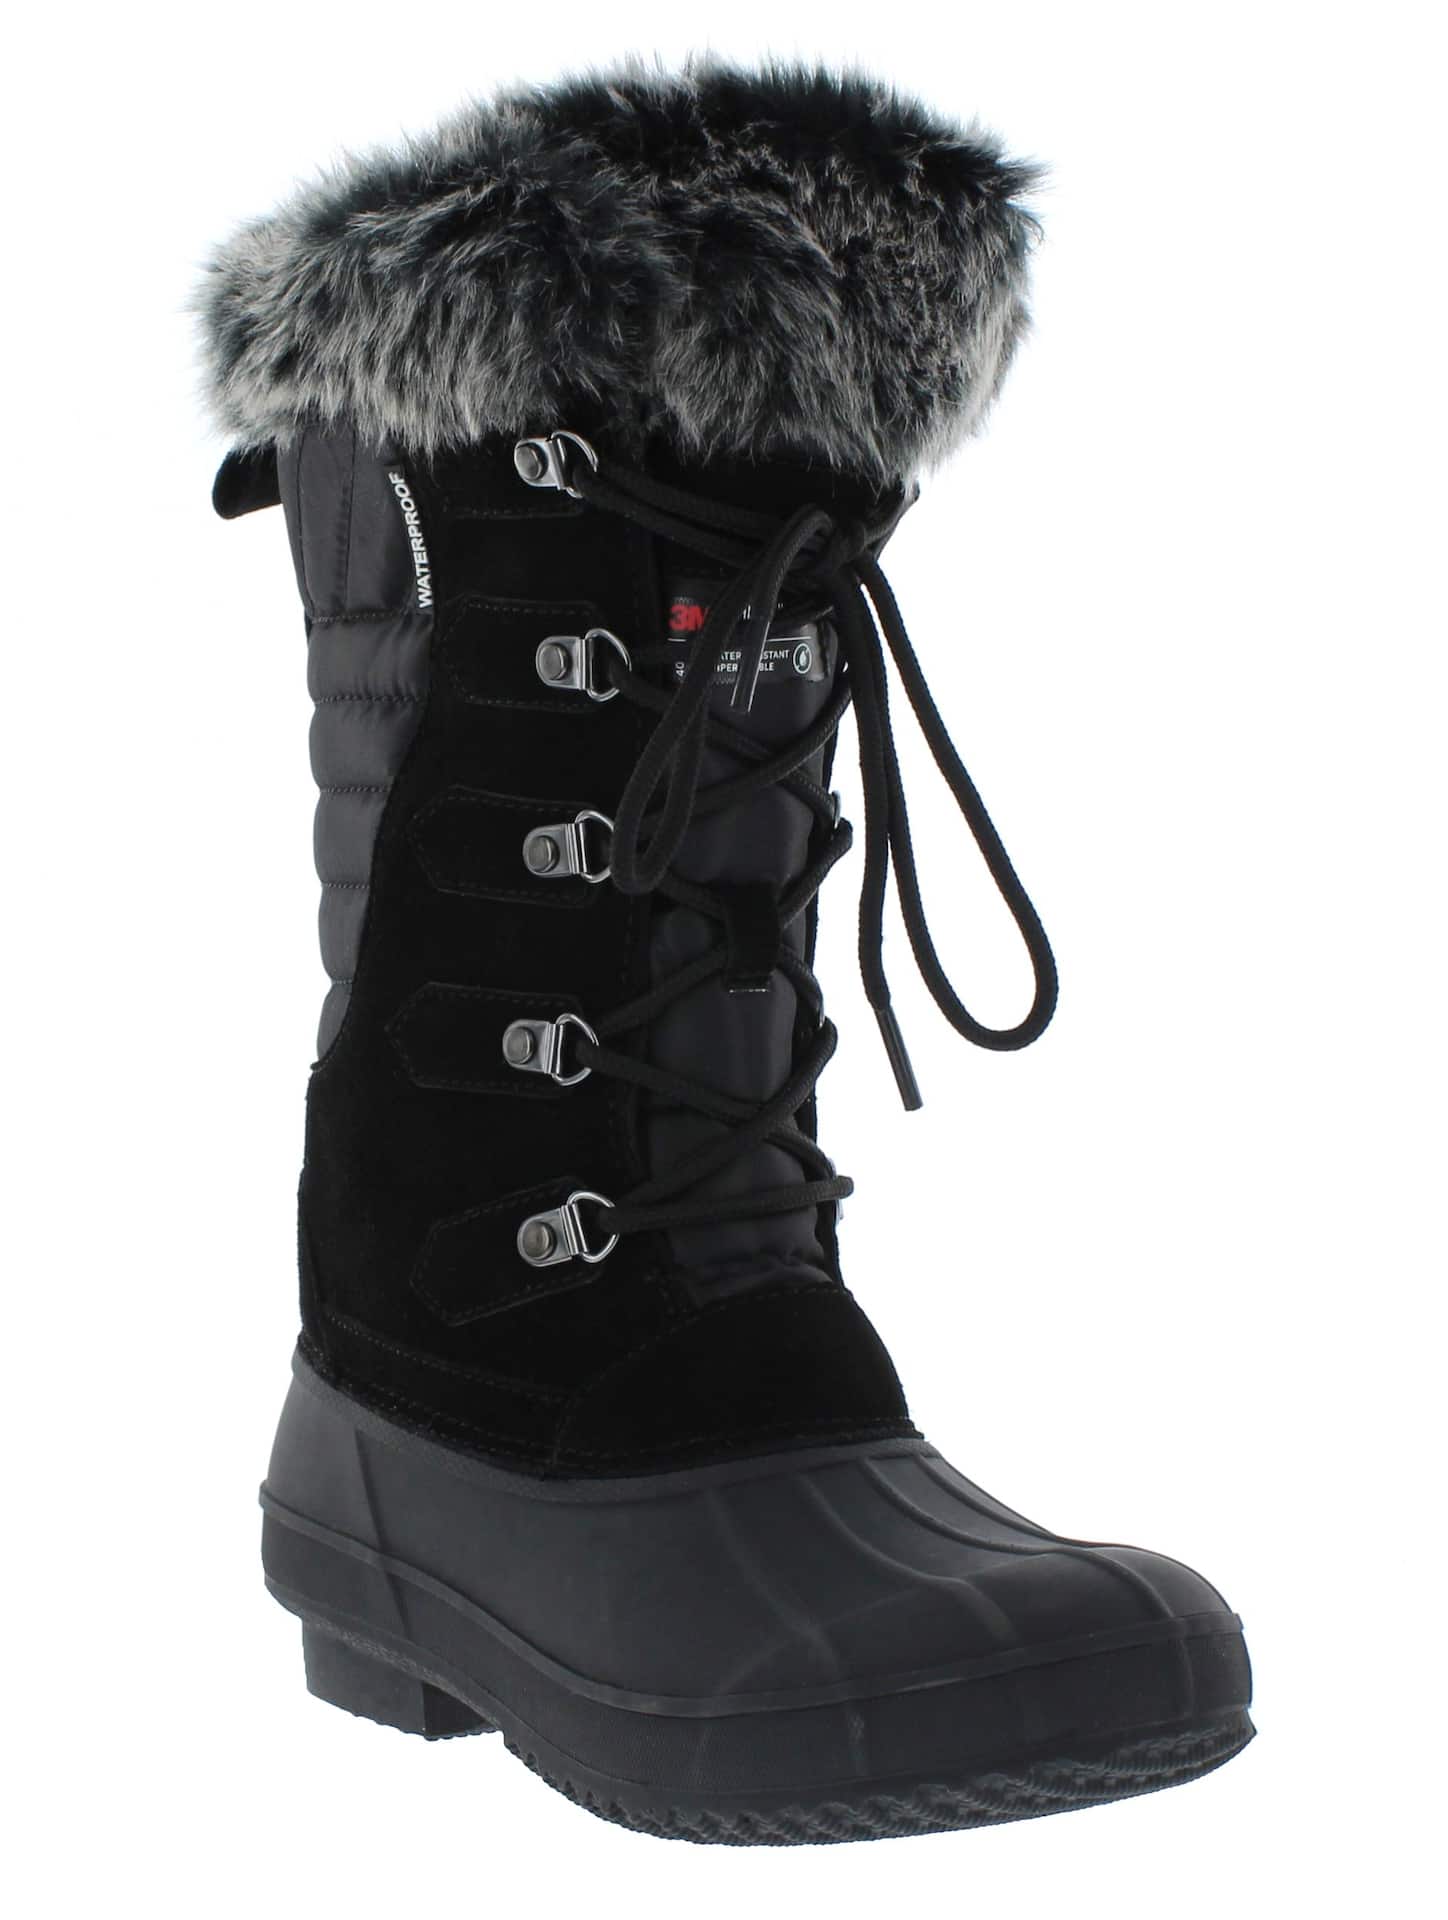 https://media-www.canadiantire.ca/product/playing/footwear-apparel/winter-footwear-apparel/1872922/outbound-women-s-sorkin-boot-black-5-b1abca87-9f7d-4d05-90ab-4554e2ba571c-jpgrendition.jpg